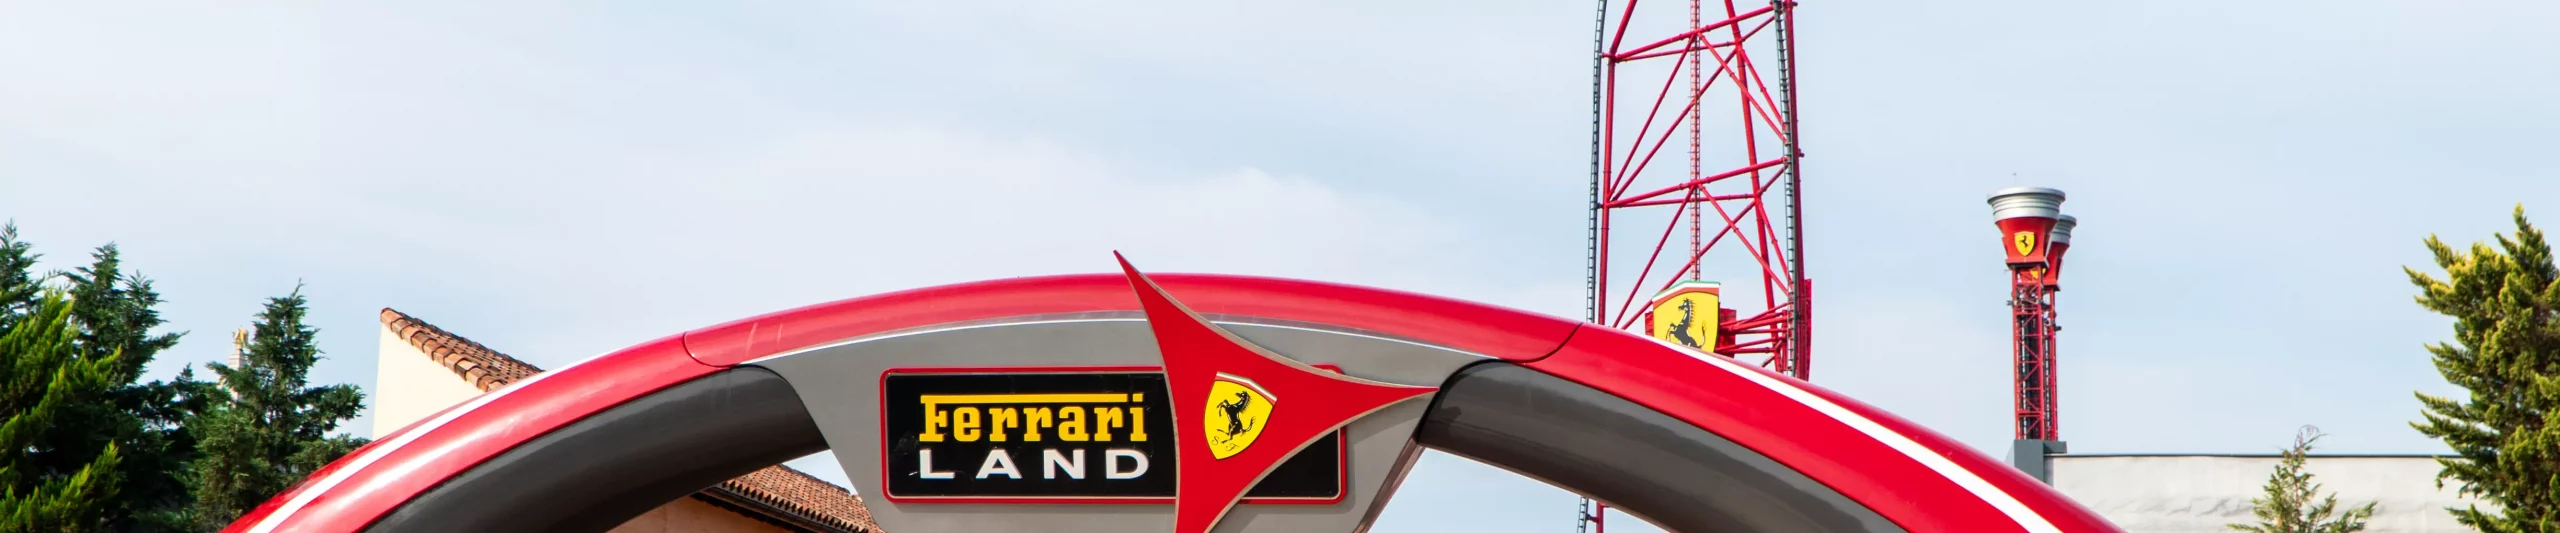 Category: Ferrari Land